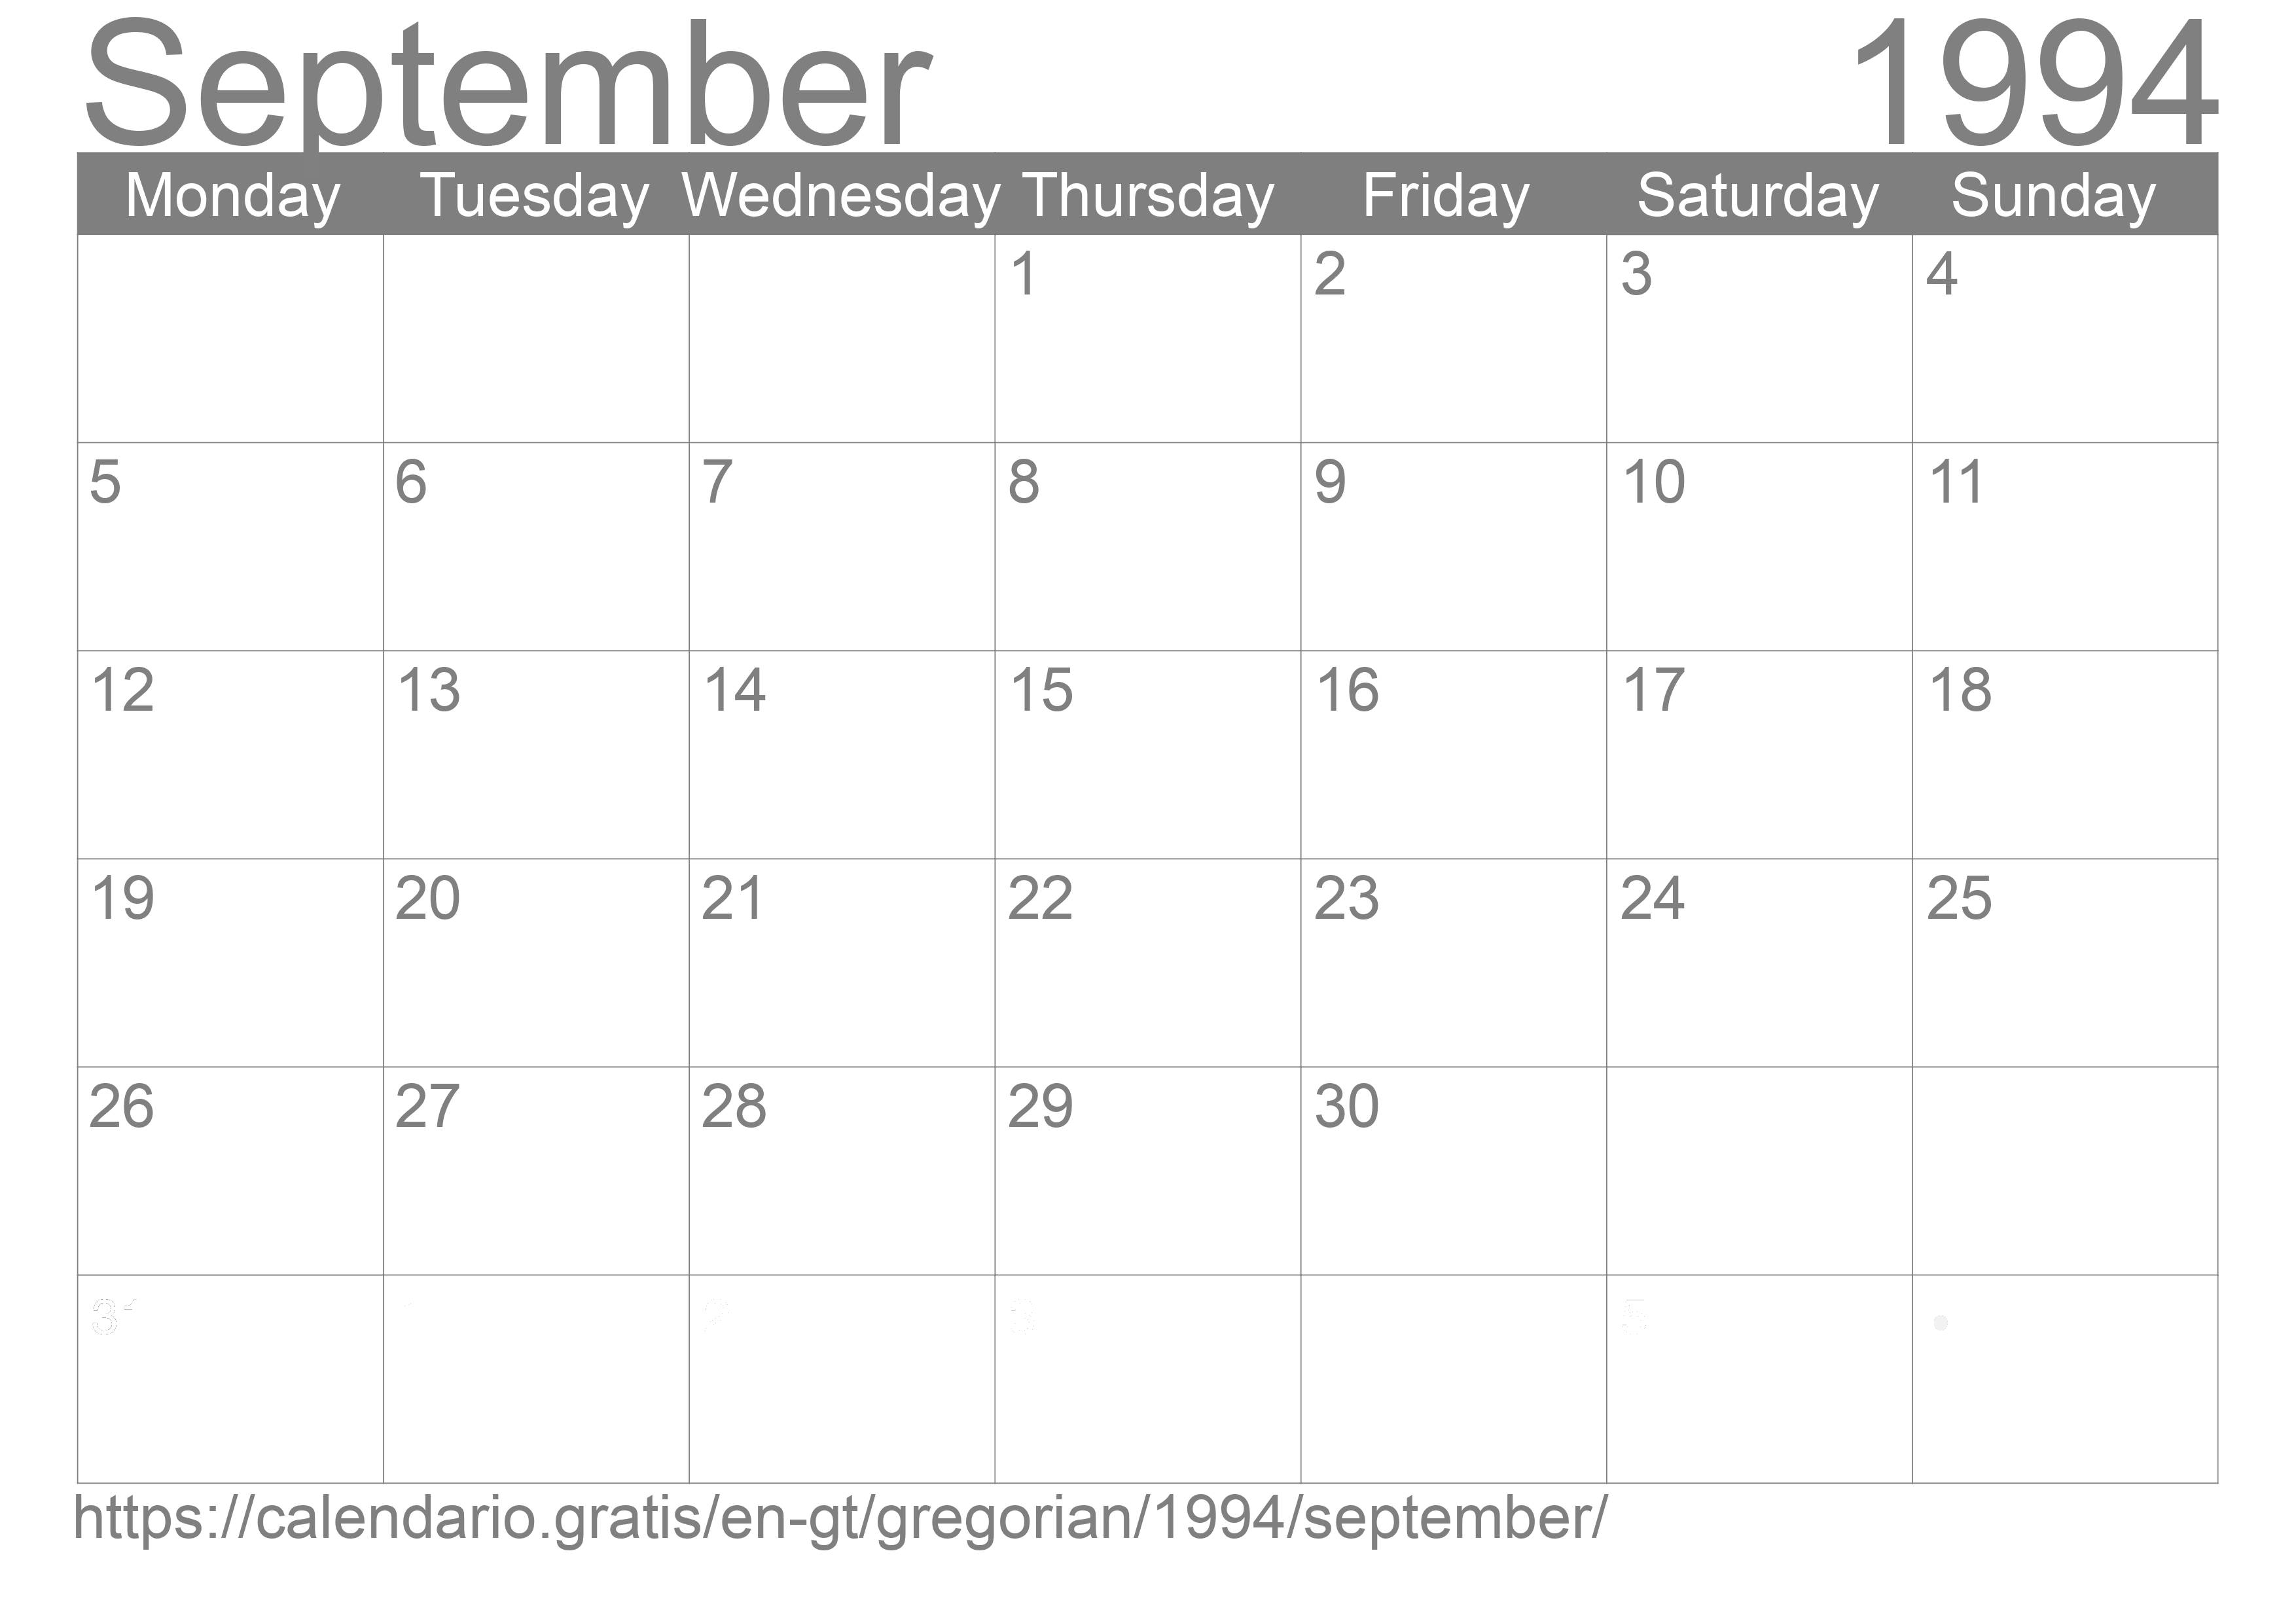 Calendar September 1994 to print